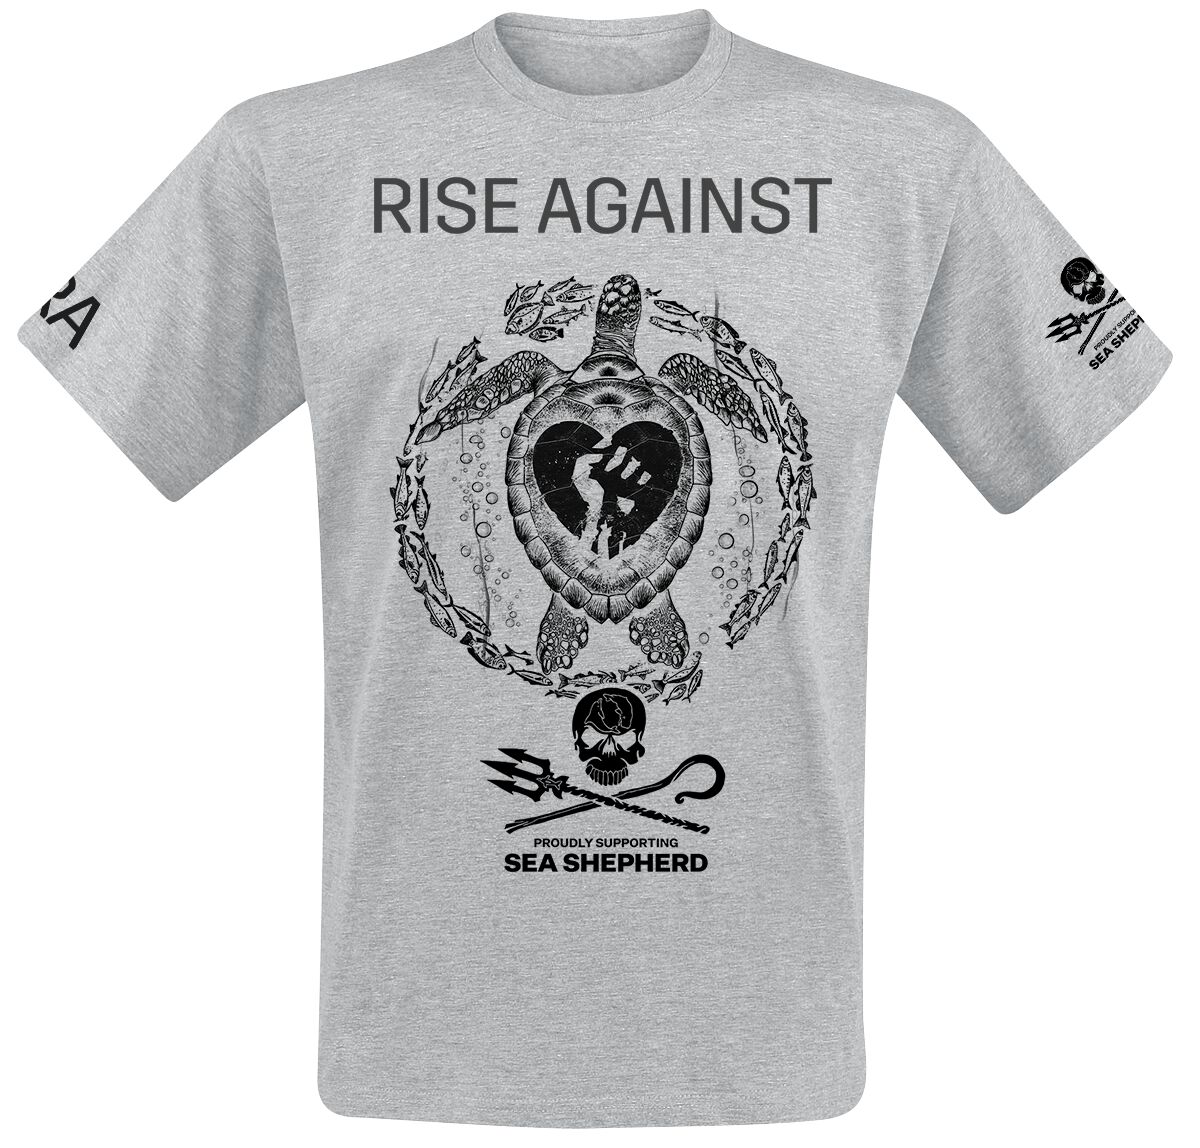 Rise Against T-Shirt - Sea Shepherd Cooperation - Our Precious Time Is Running Out - S bis 3XL - für Männer - Größe M - grau meliert  - EMP exklusives